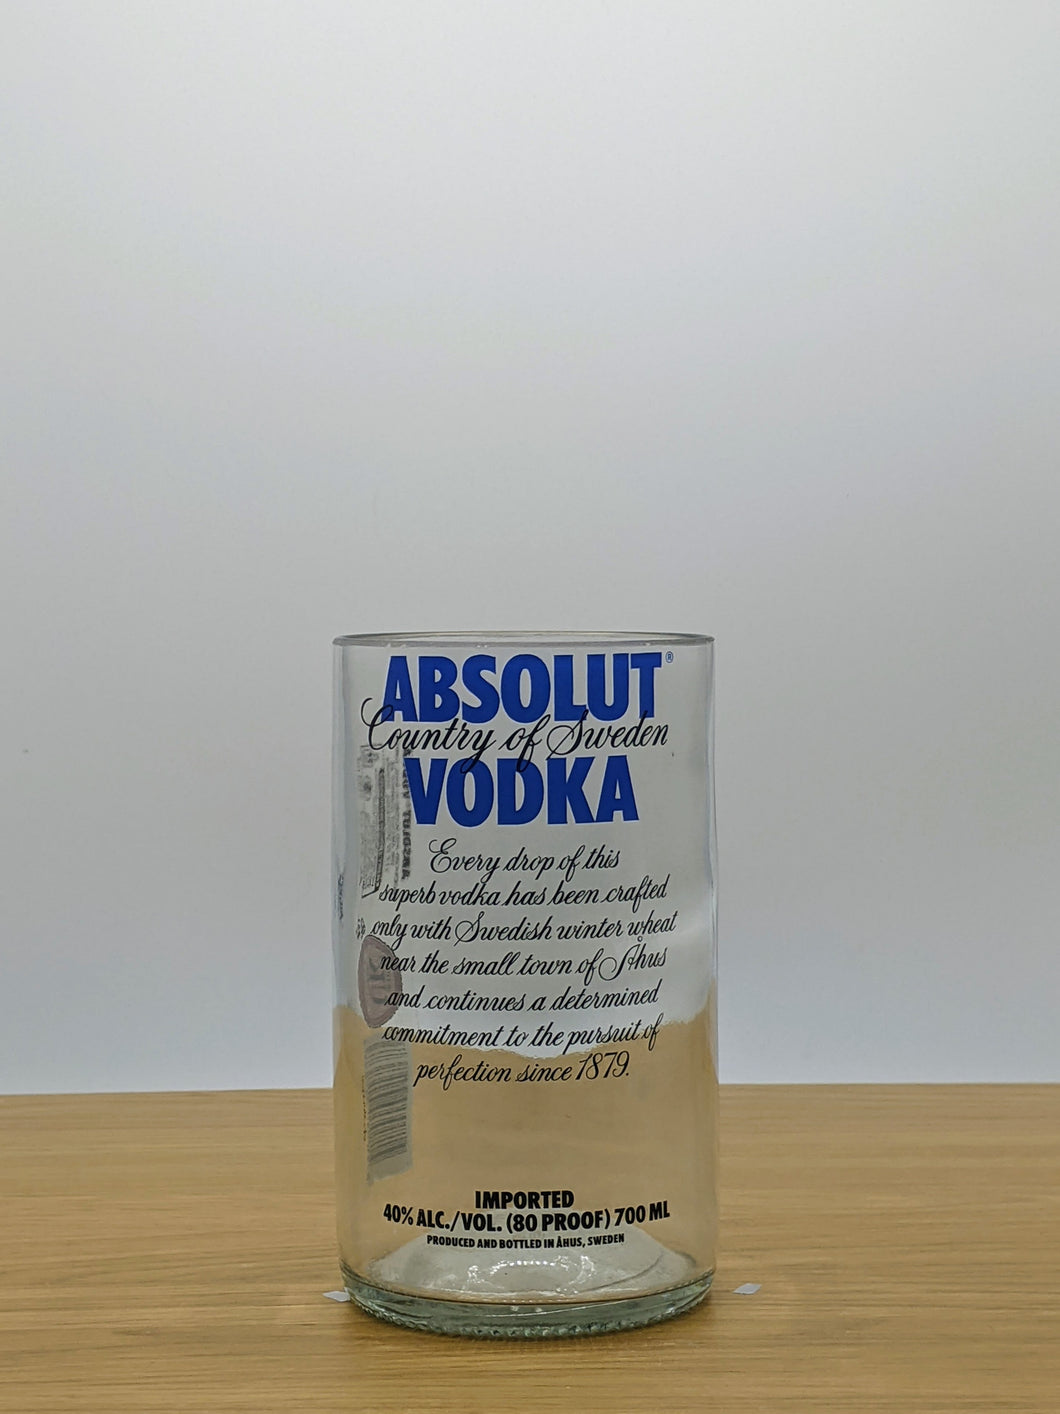 Absolut vodka bottle glass